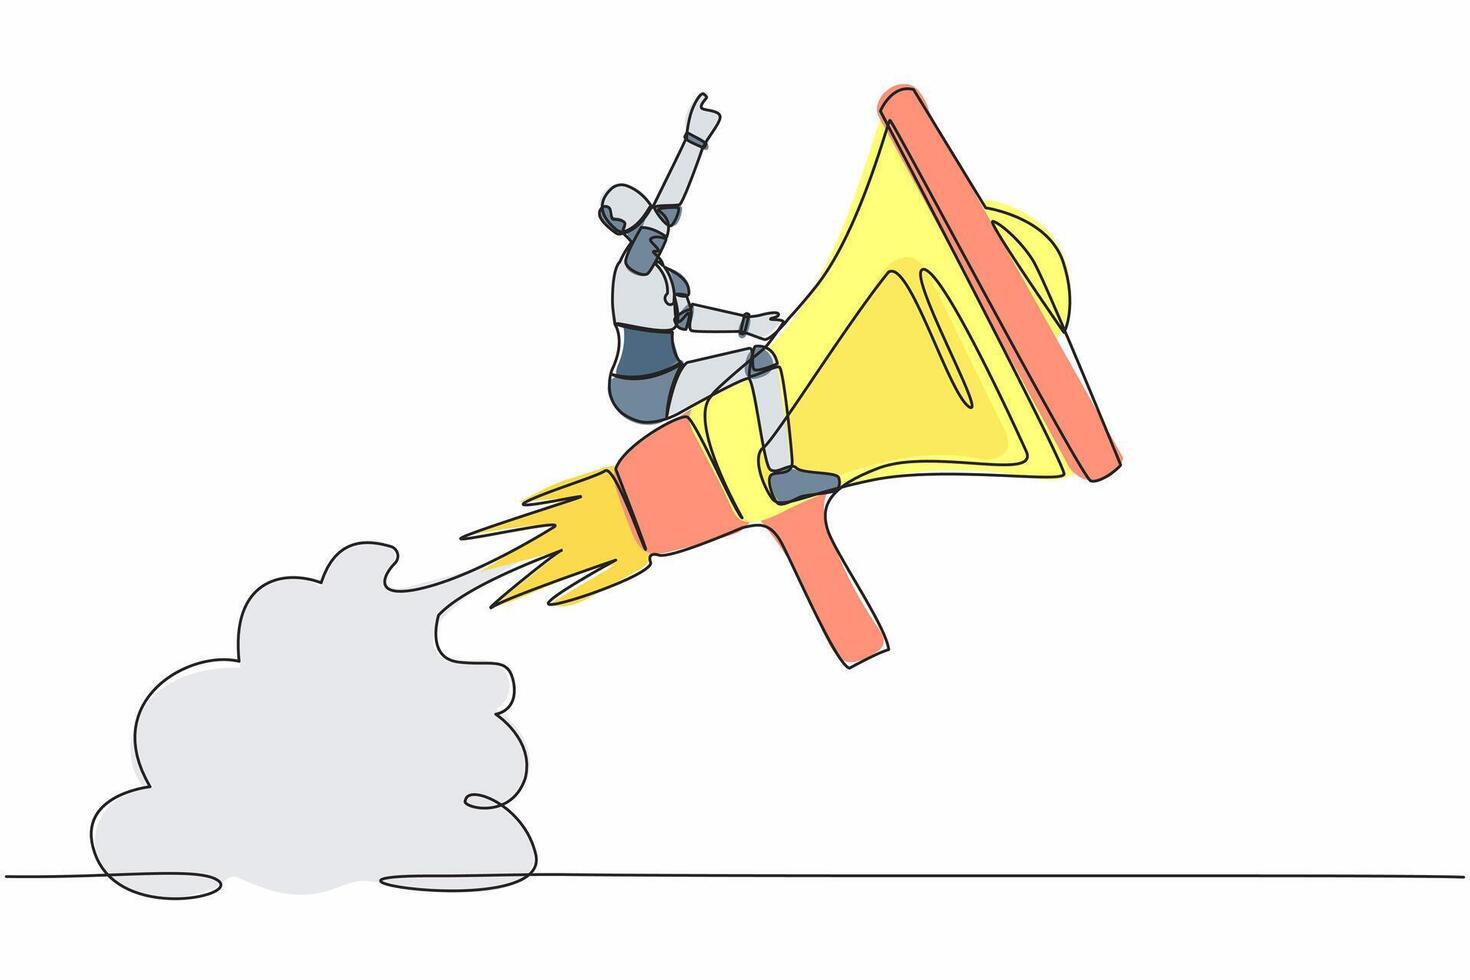 continuo uno línea dibujo de robot montando megáfono cohete volador en cielo. suave habilidad a comunicar con equipo. humanoide robot cibernético organismo. soltero línea dibujar diseño vector gráfico ilustración